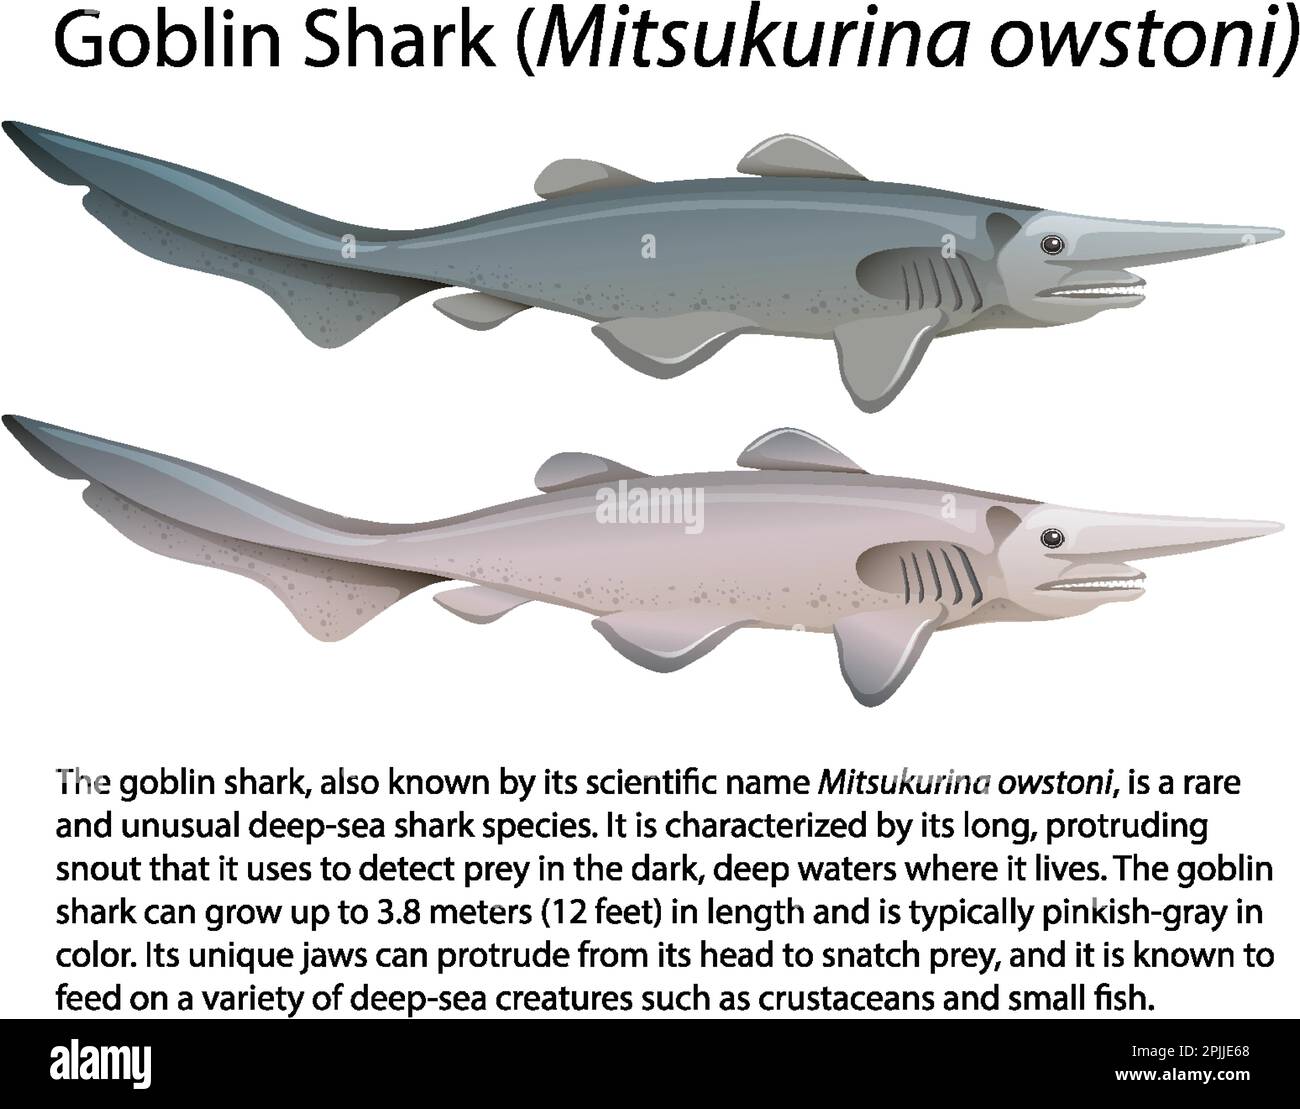 Requin gobelin (Mitsukurina owstoni) avec illustration textuelle informative Illustration de Vecteur